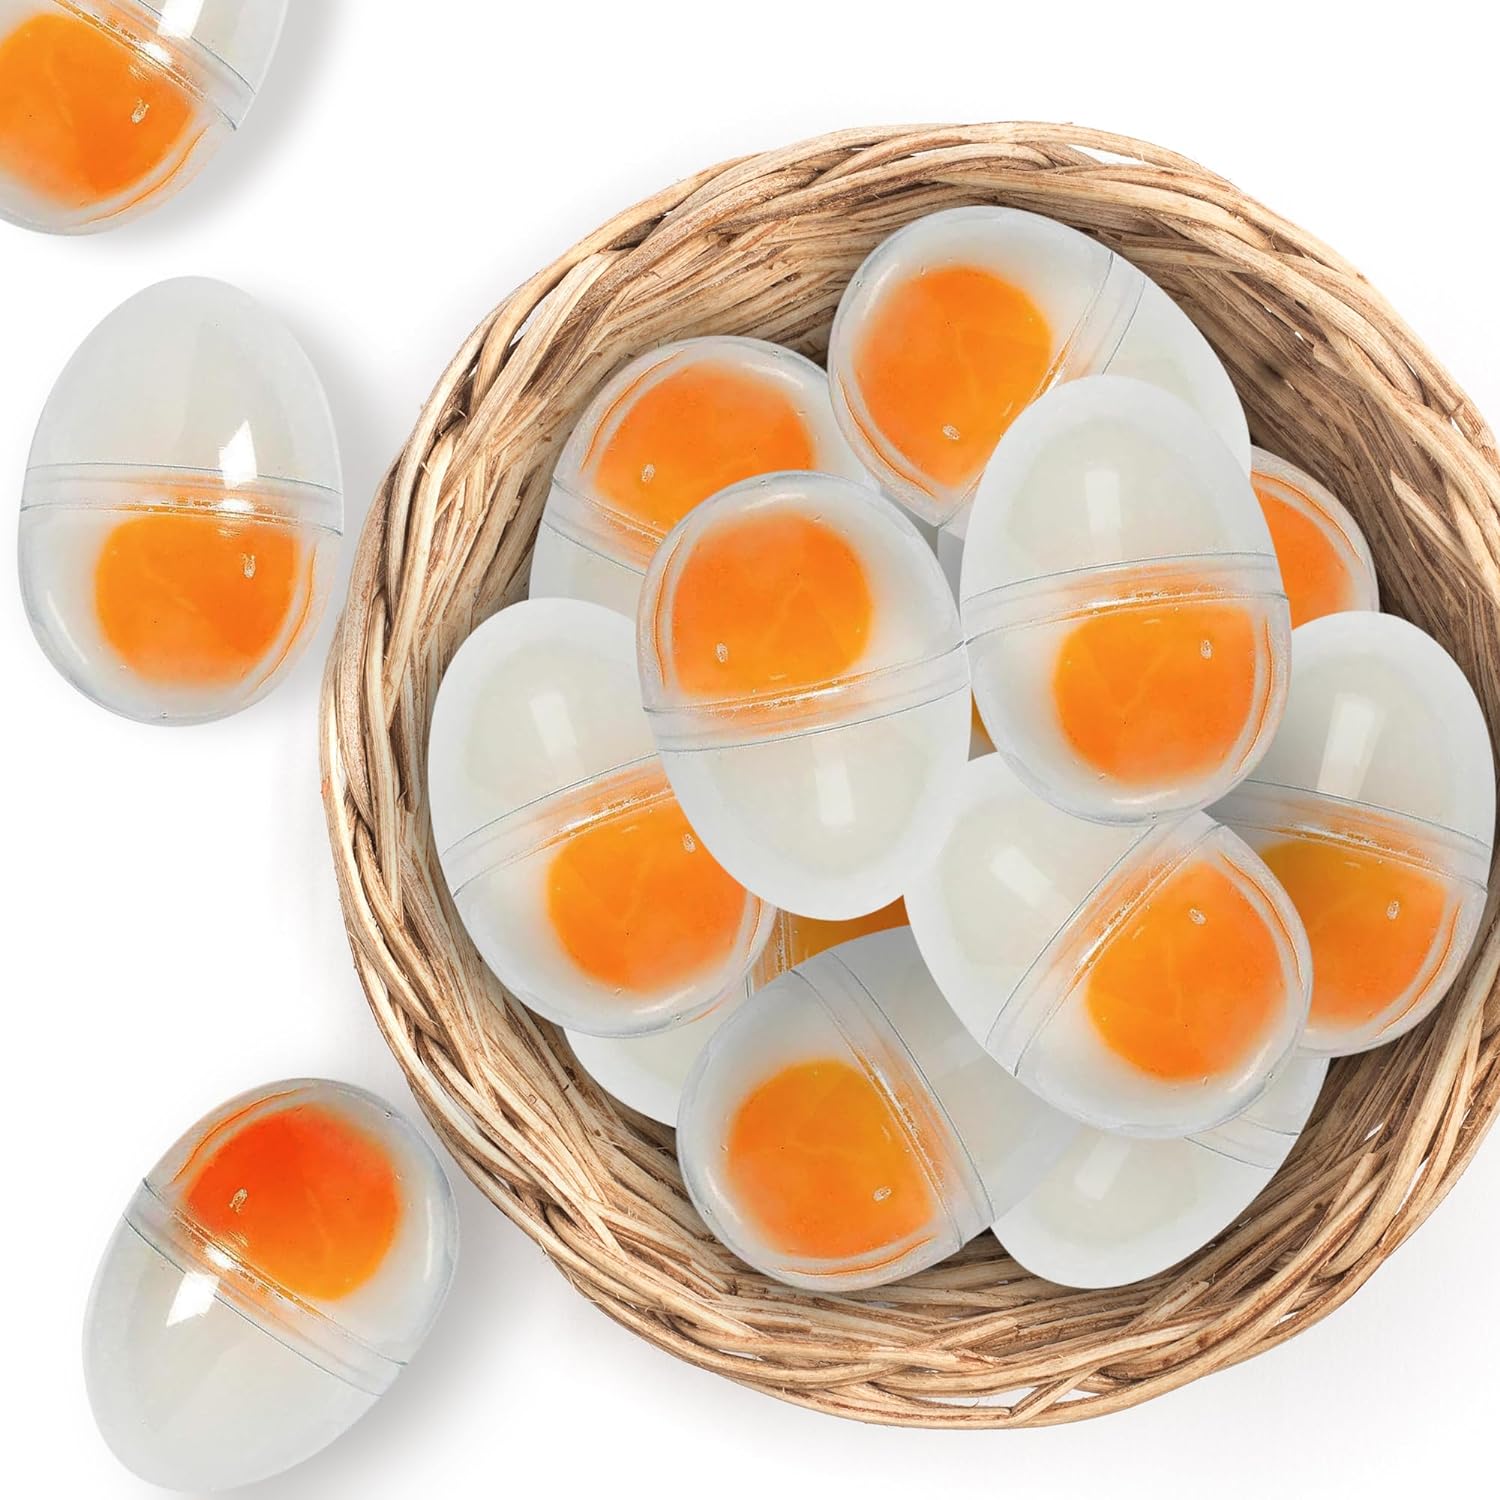 Easter Slime Eggs - Set of 12 Slime Filled Eggs - Pre-Filled Surprise Eggs for Kids with Slime Inside